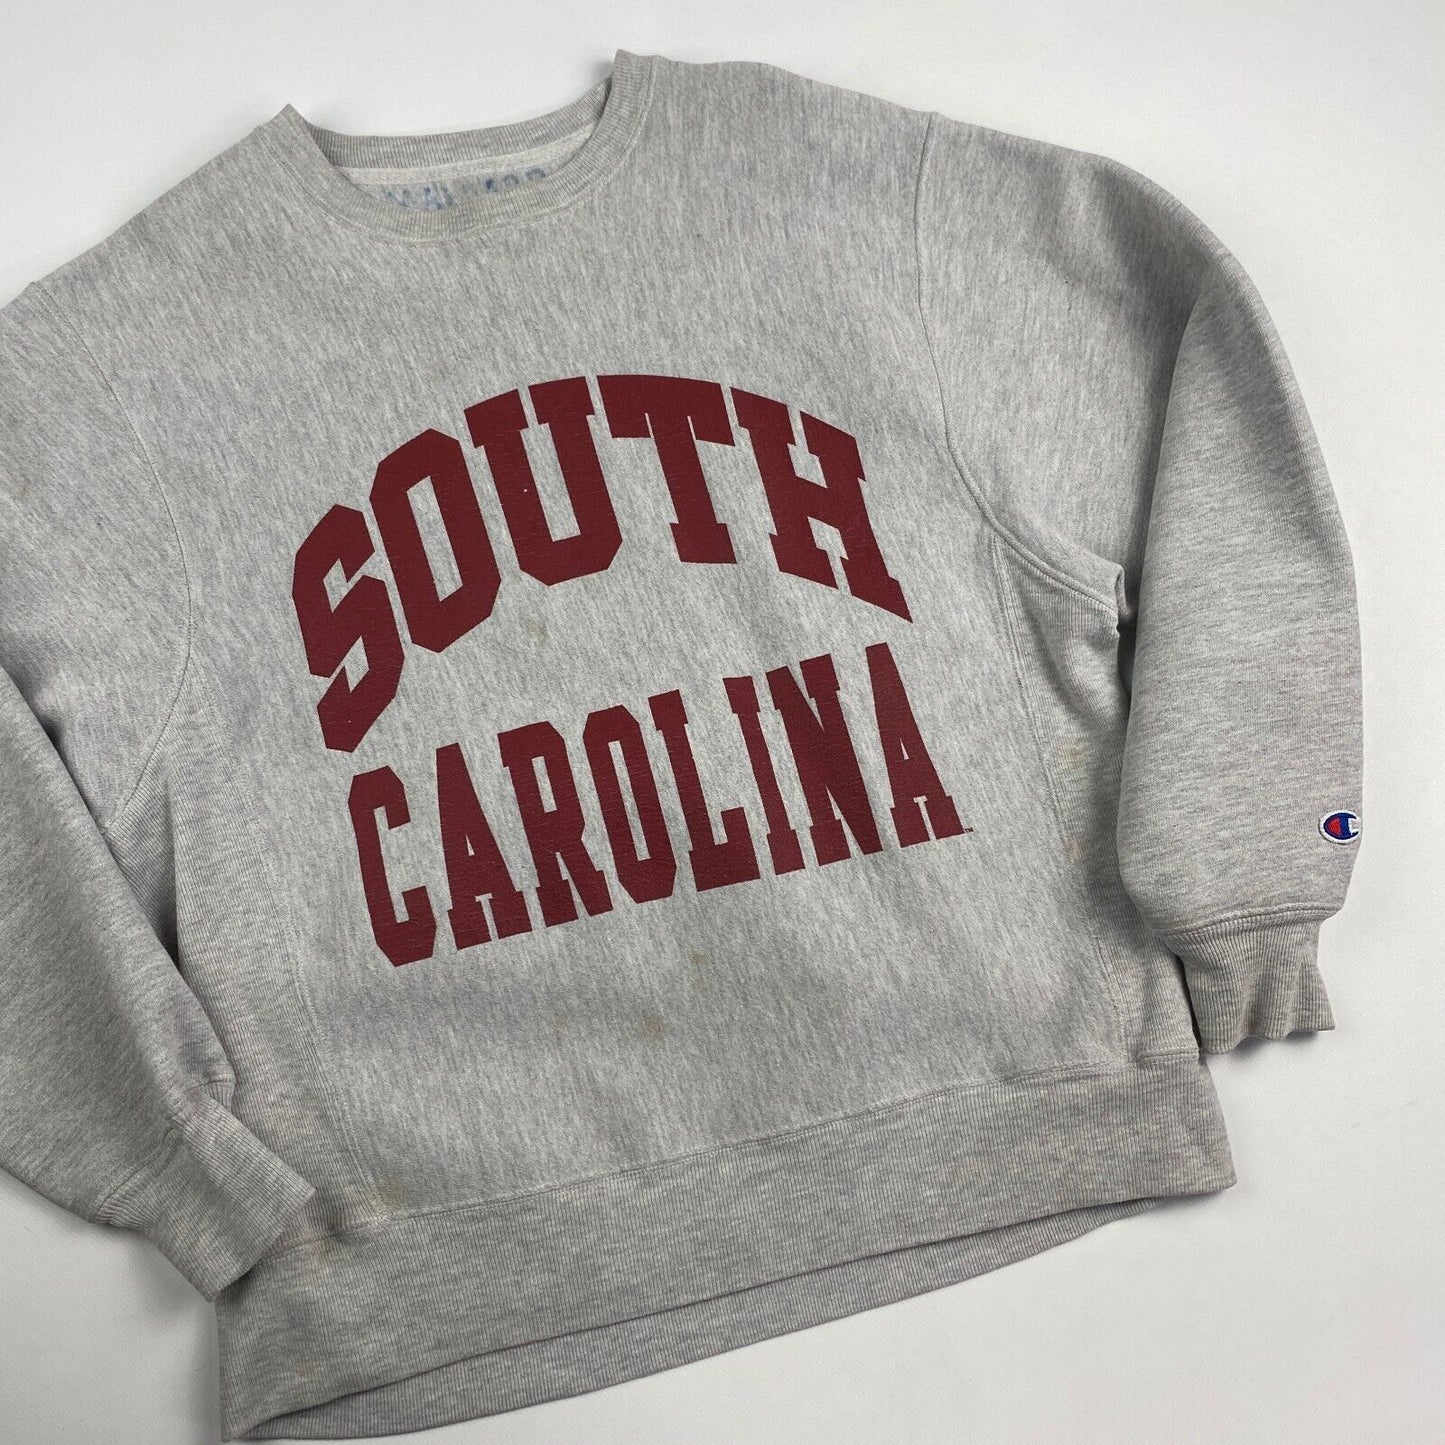 VINTAGE South Carolina Champion Reverse Weave Crewneck Sweater sz Small Mens